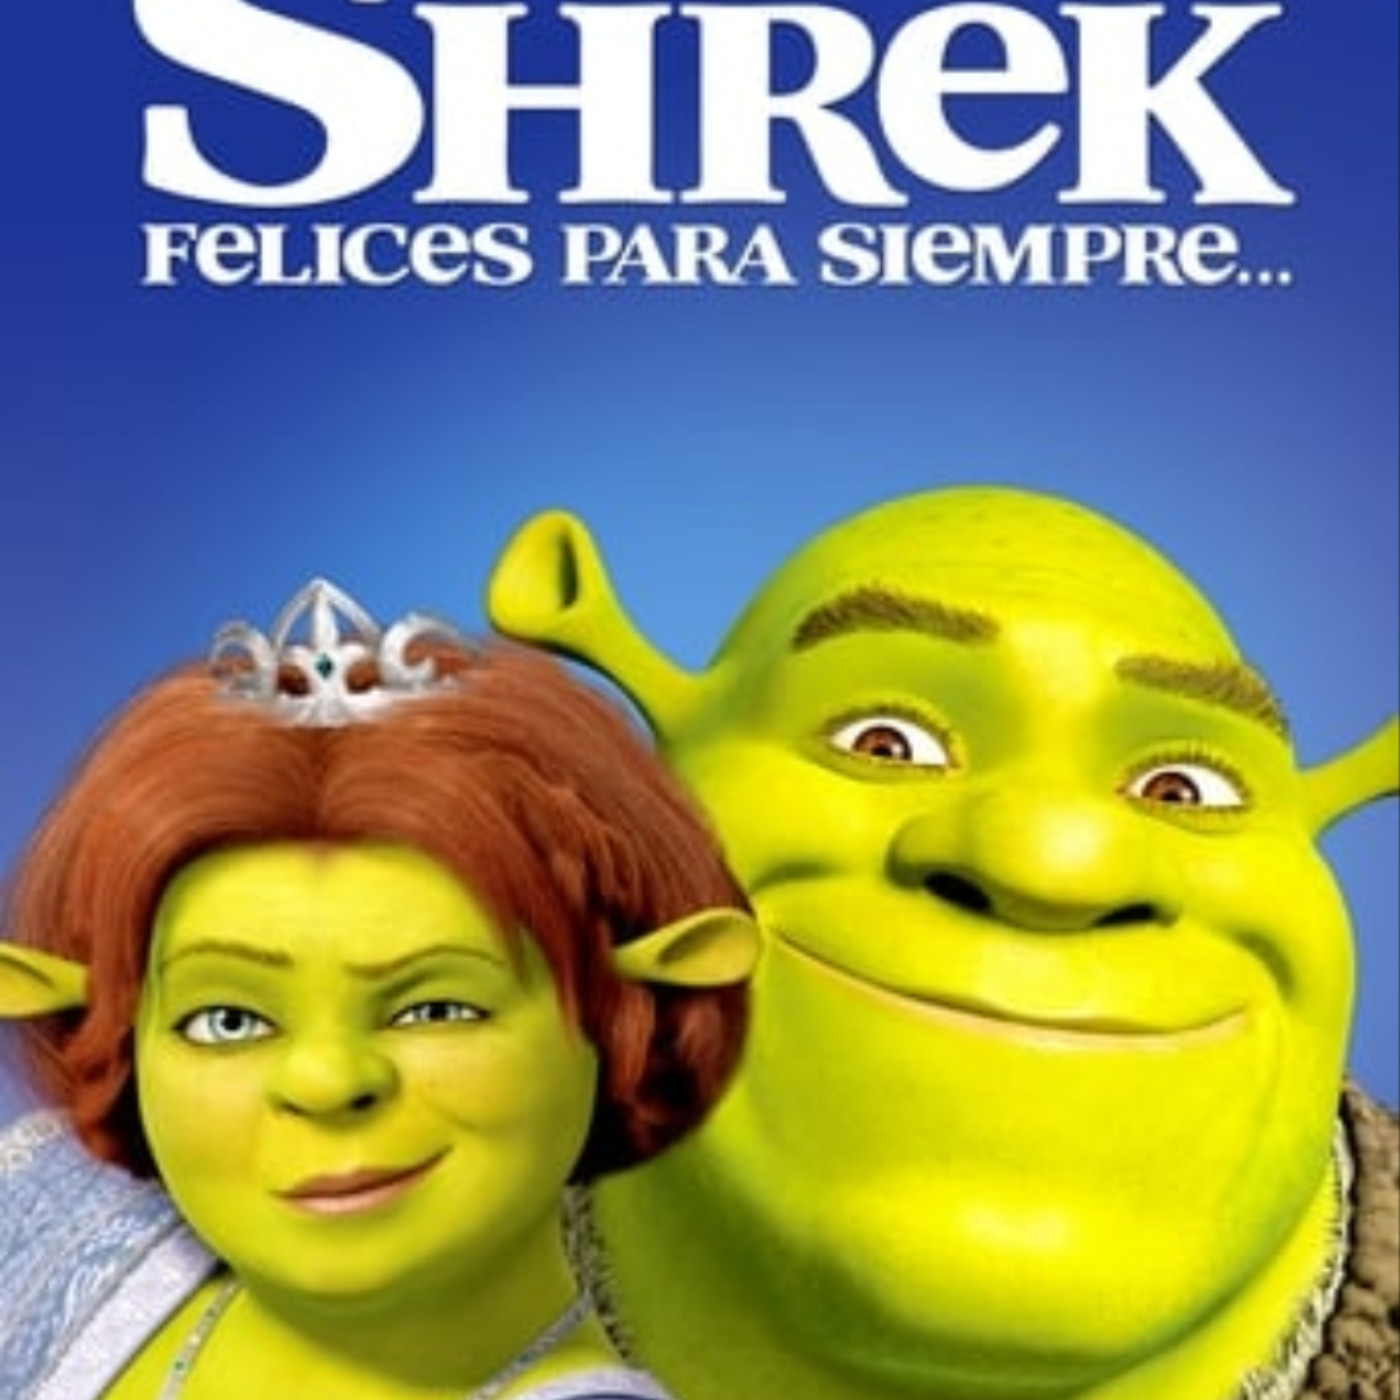 720p] Shrek, felices para siempre pelicula completa en español gratis  Repelis | Podcast on SoundOn